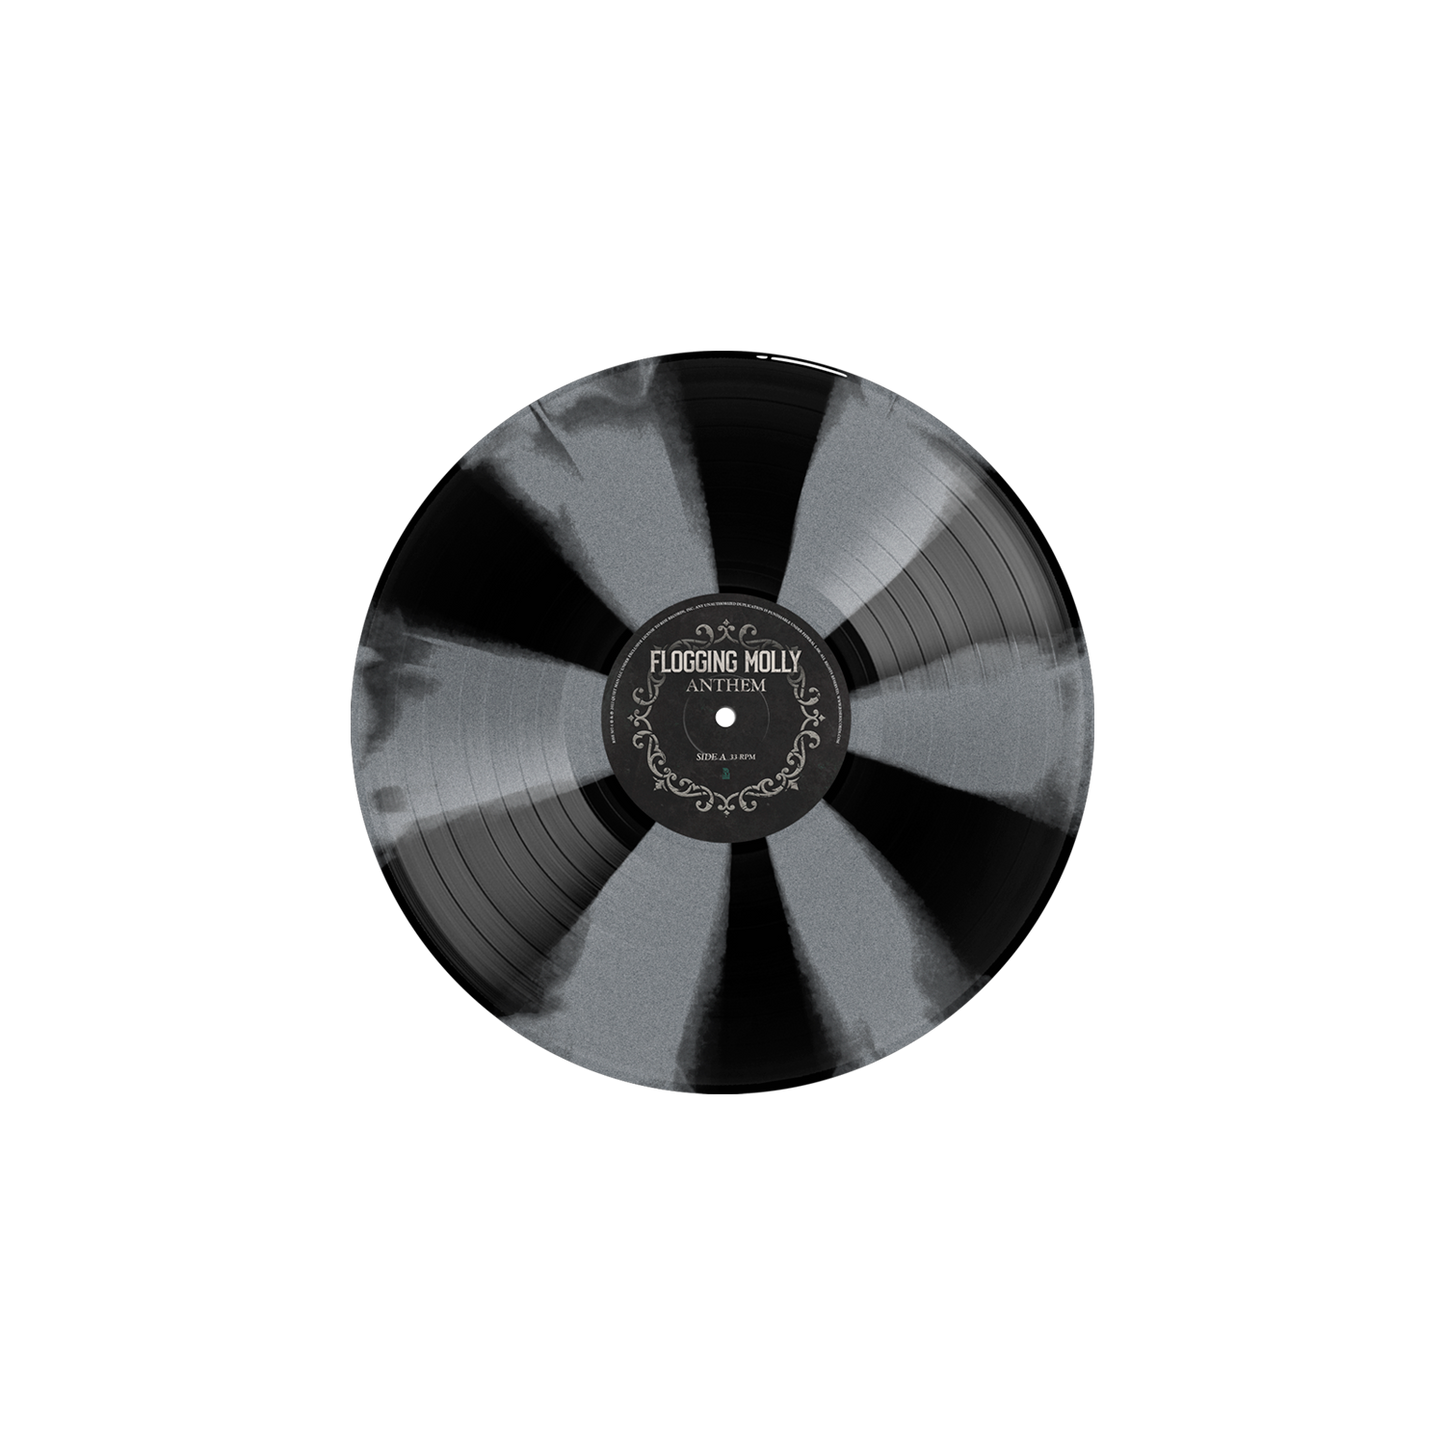 Anthem LP (colored vinyl: Black & Gray)